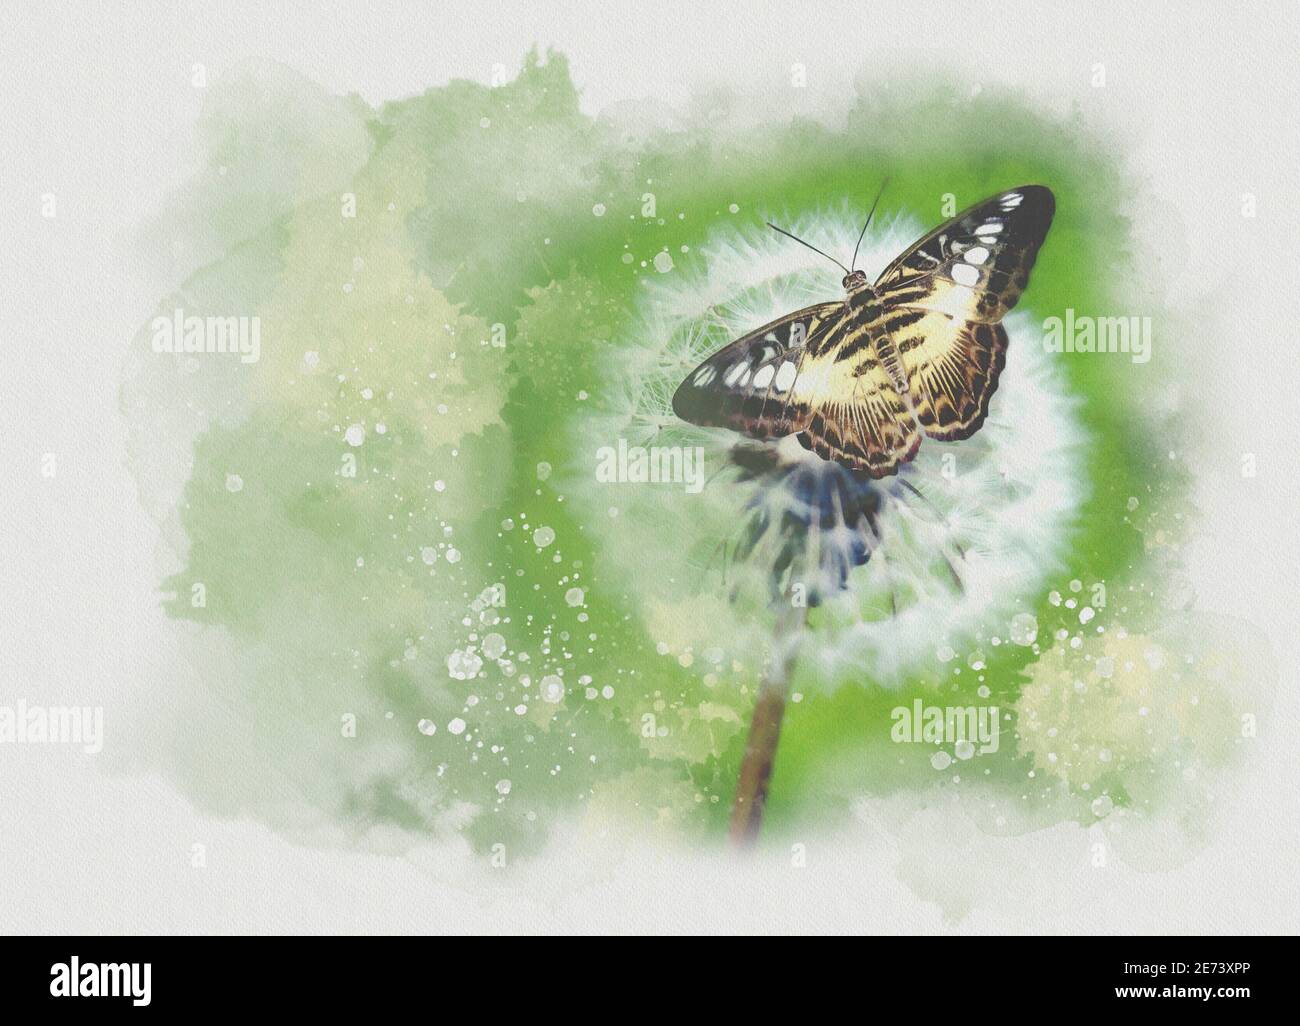 Butterfly landing on a dandelion seedhead, illustration Stock Photo